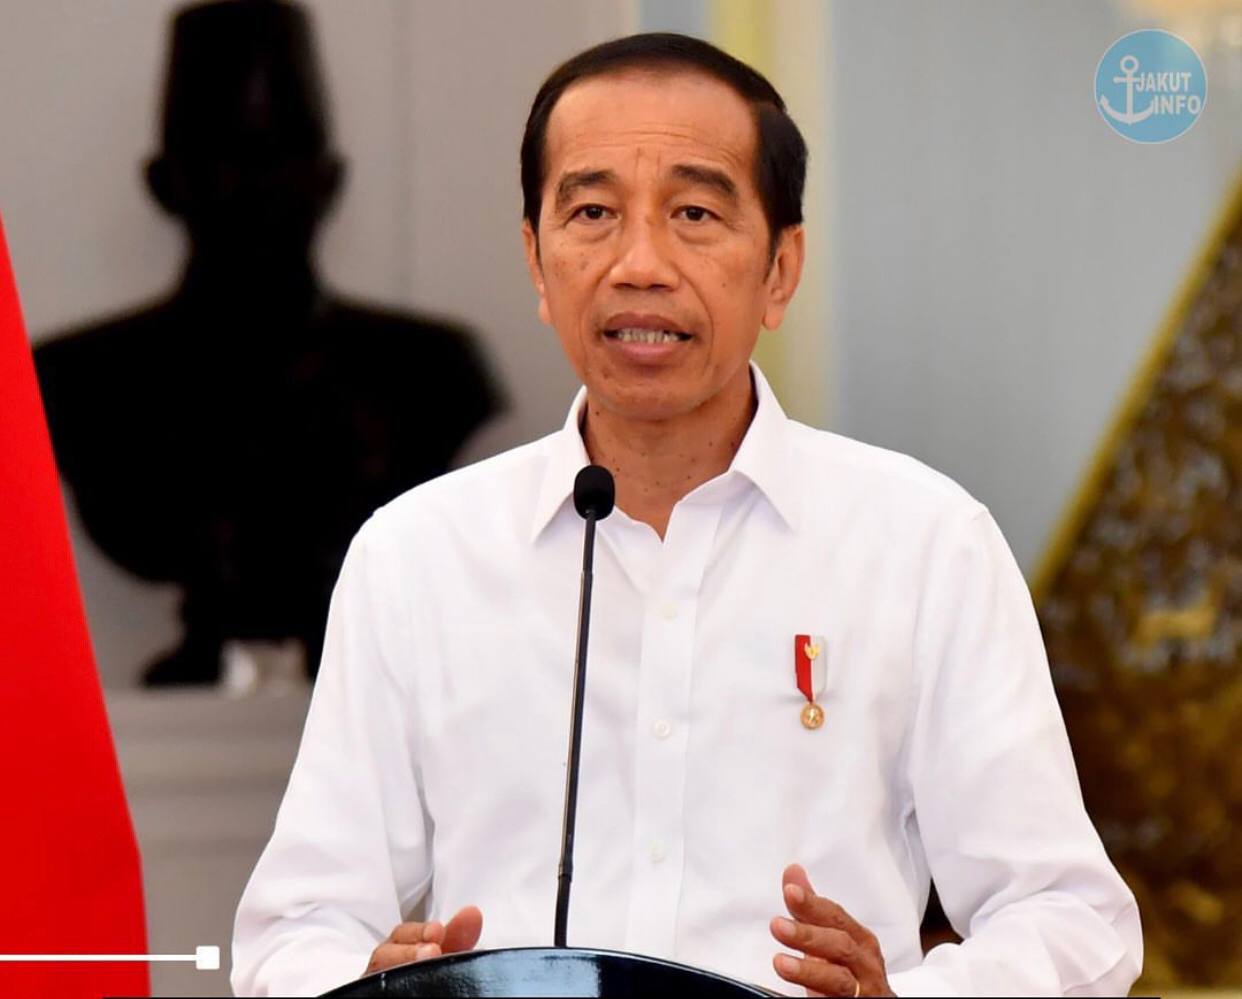 Respon Presiden Jokowi Soal Mahfud MD Mundur Kabinet: Itu Hak, Saya Menghargai